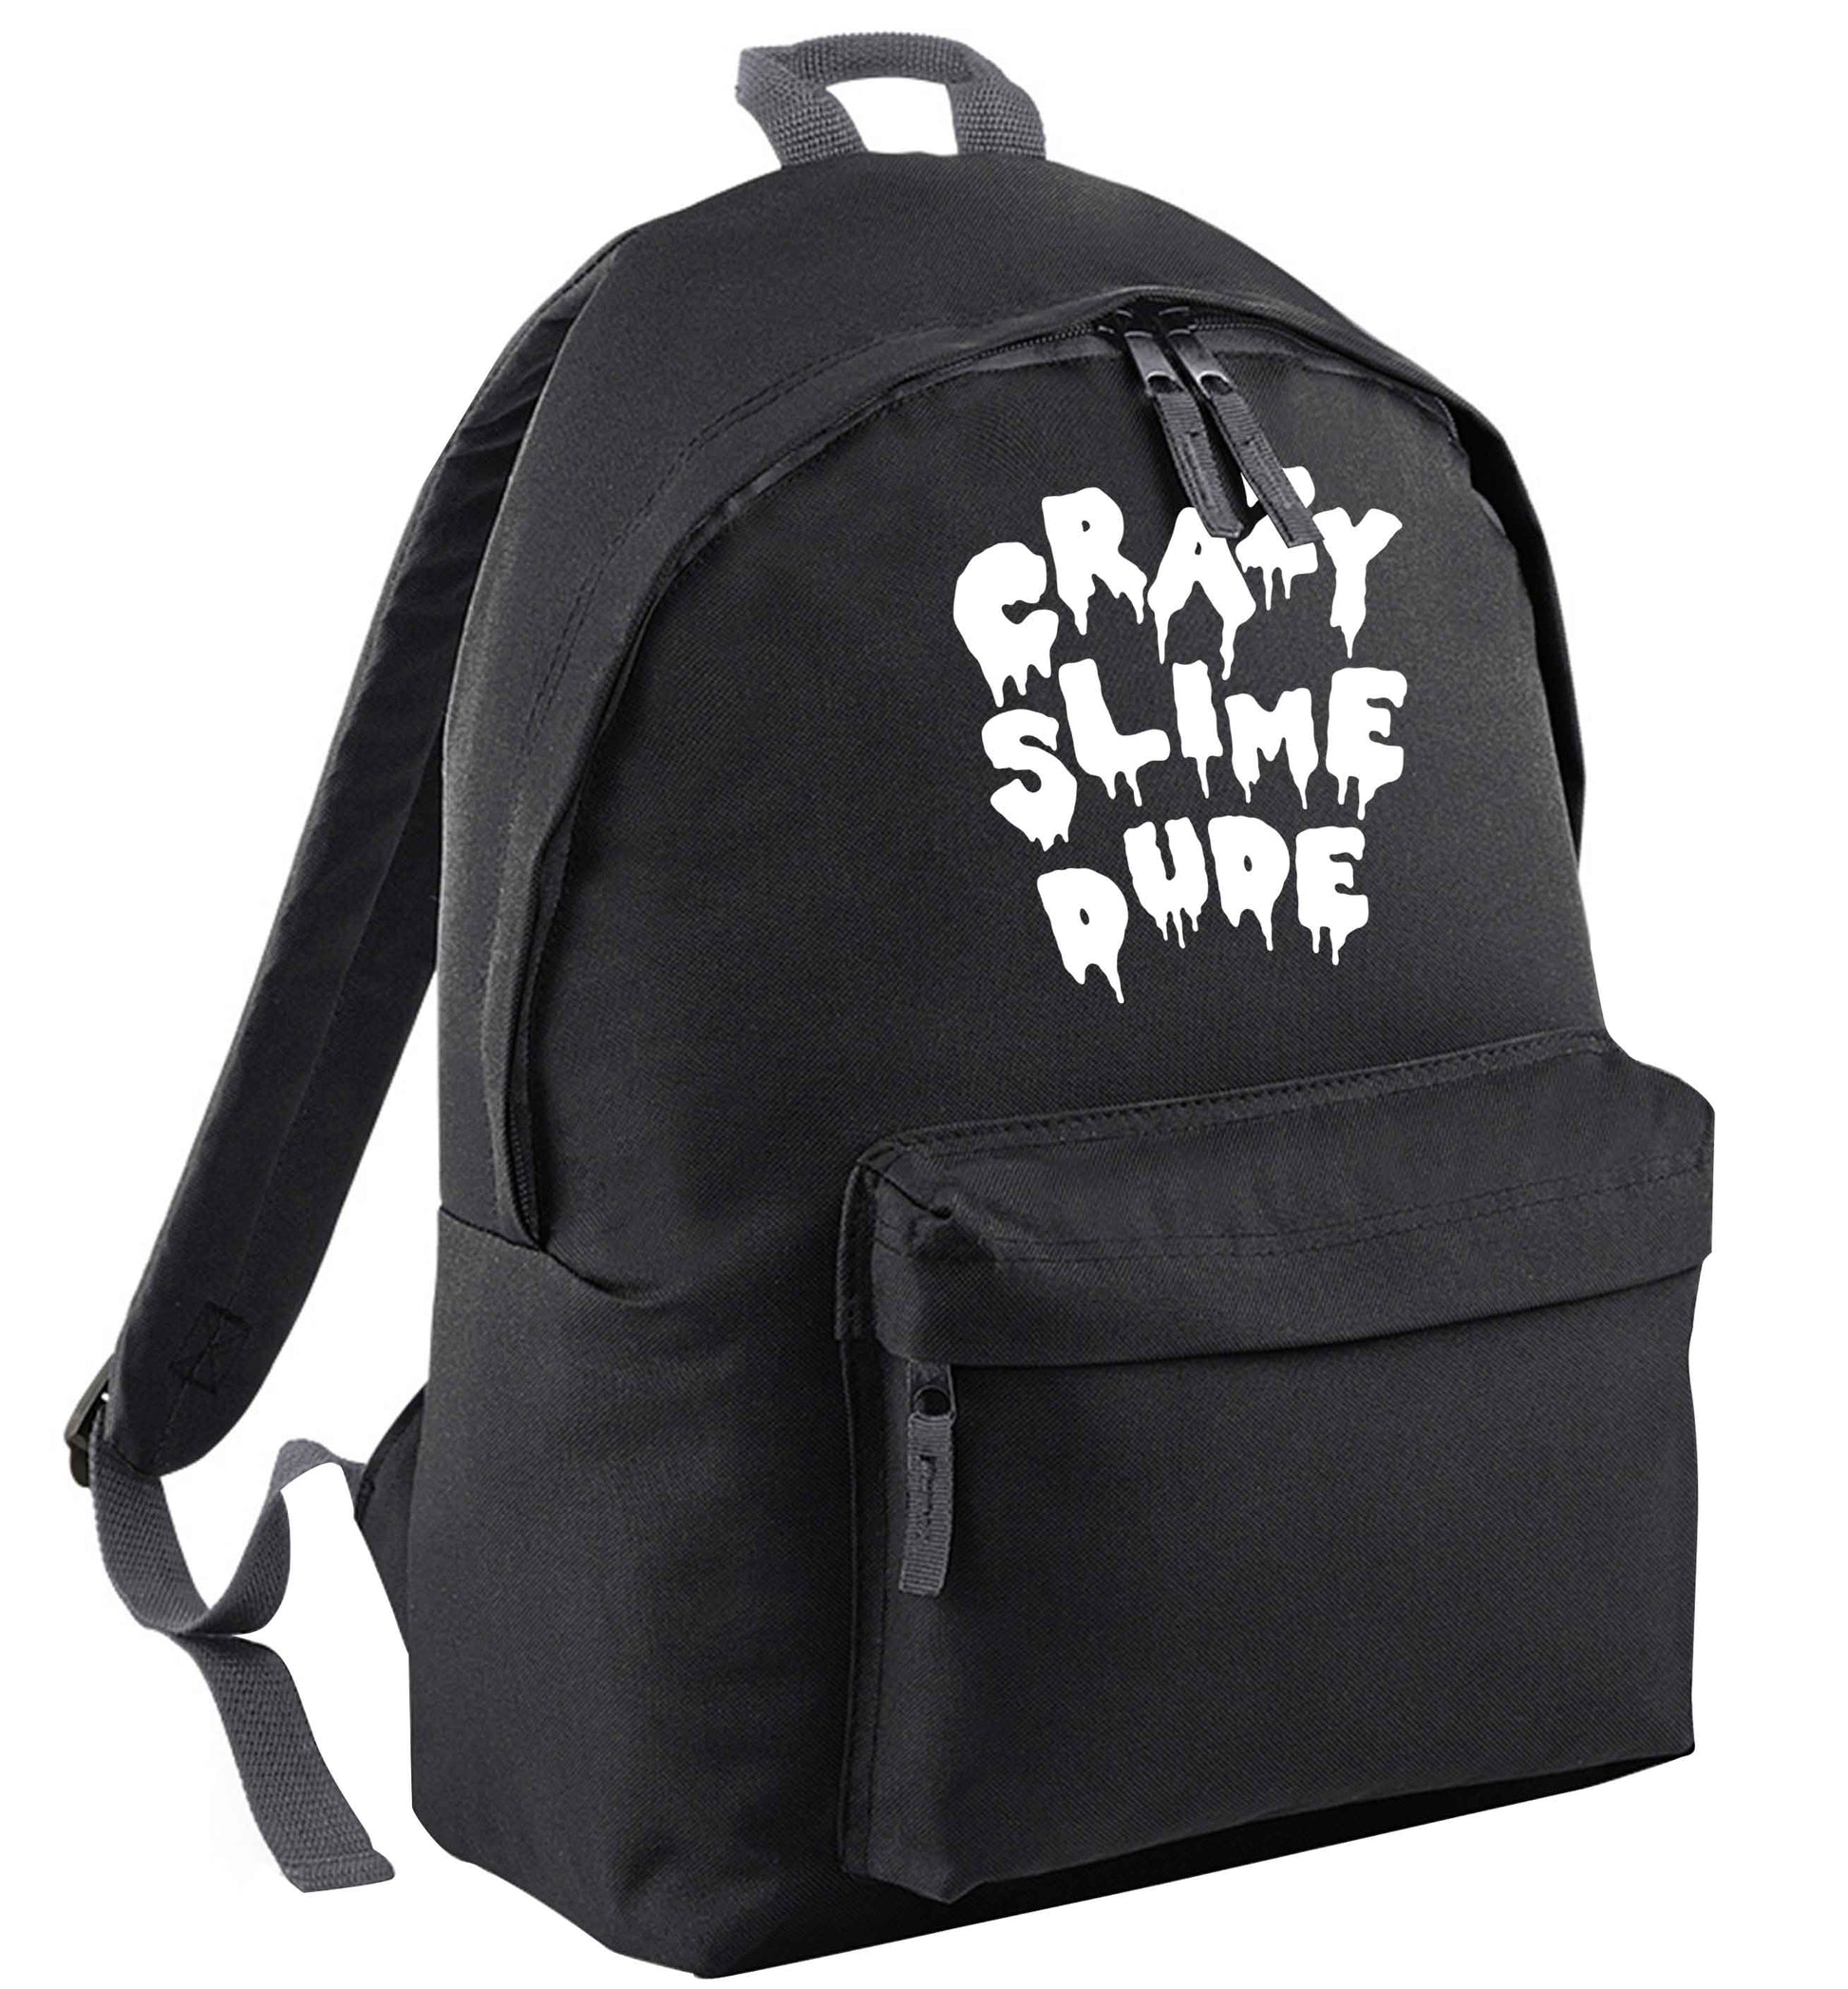 Crazy slime dude black adults backpack